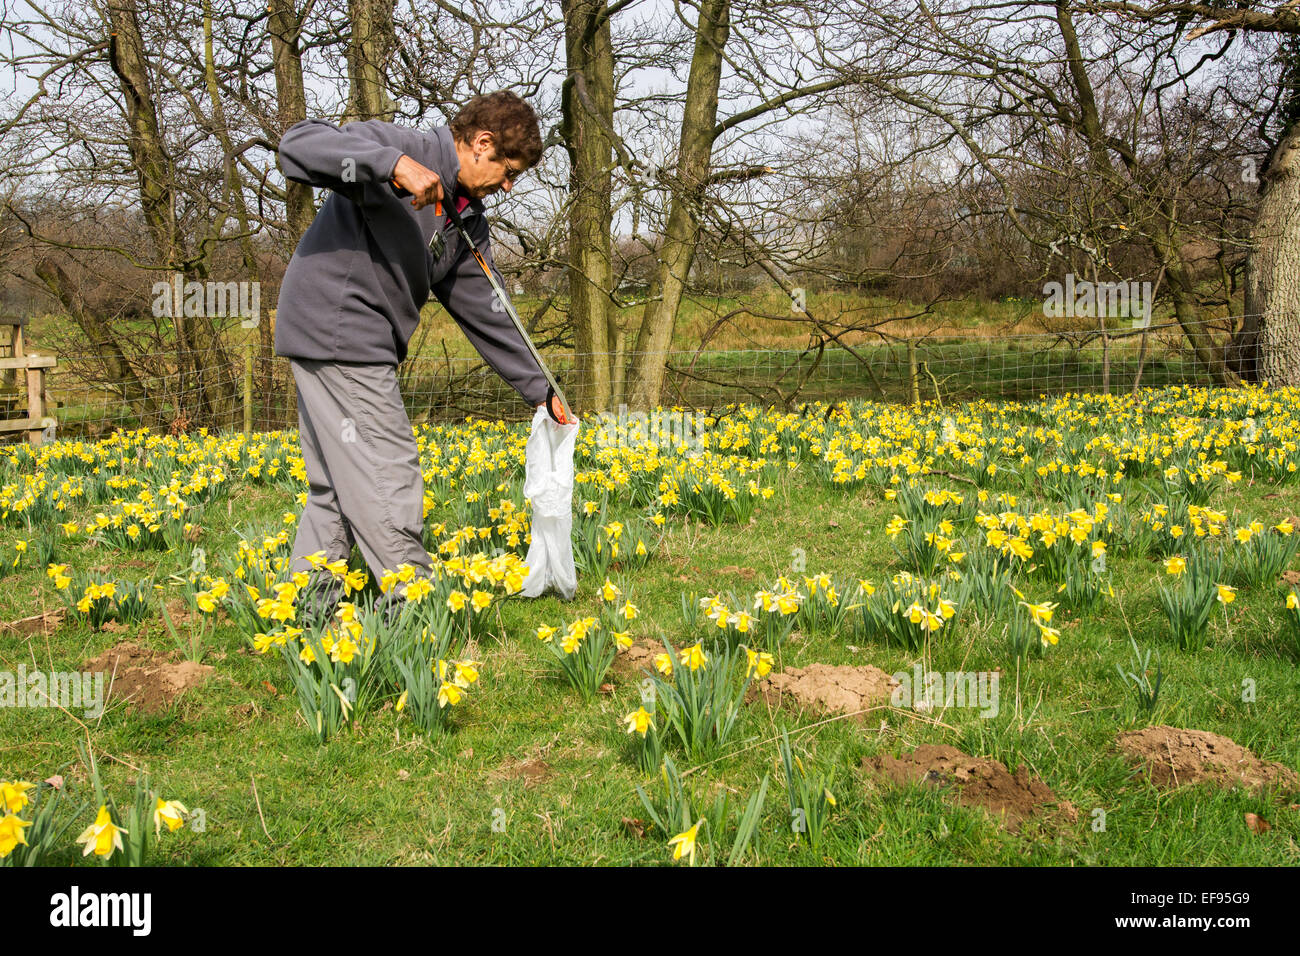 Member of North York Moors staff picking litter at Farndale daffodil fields, UK. Stock Photo